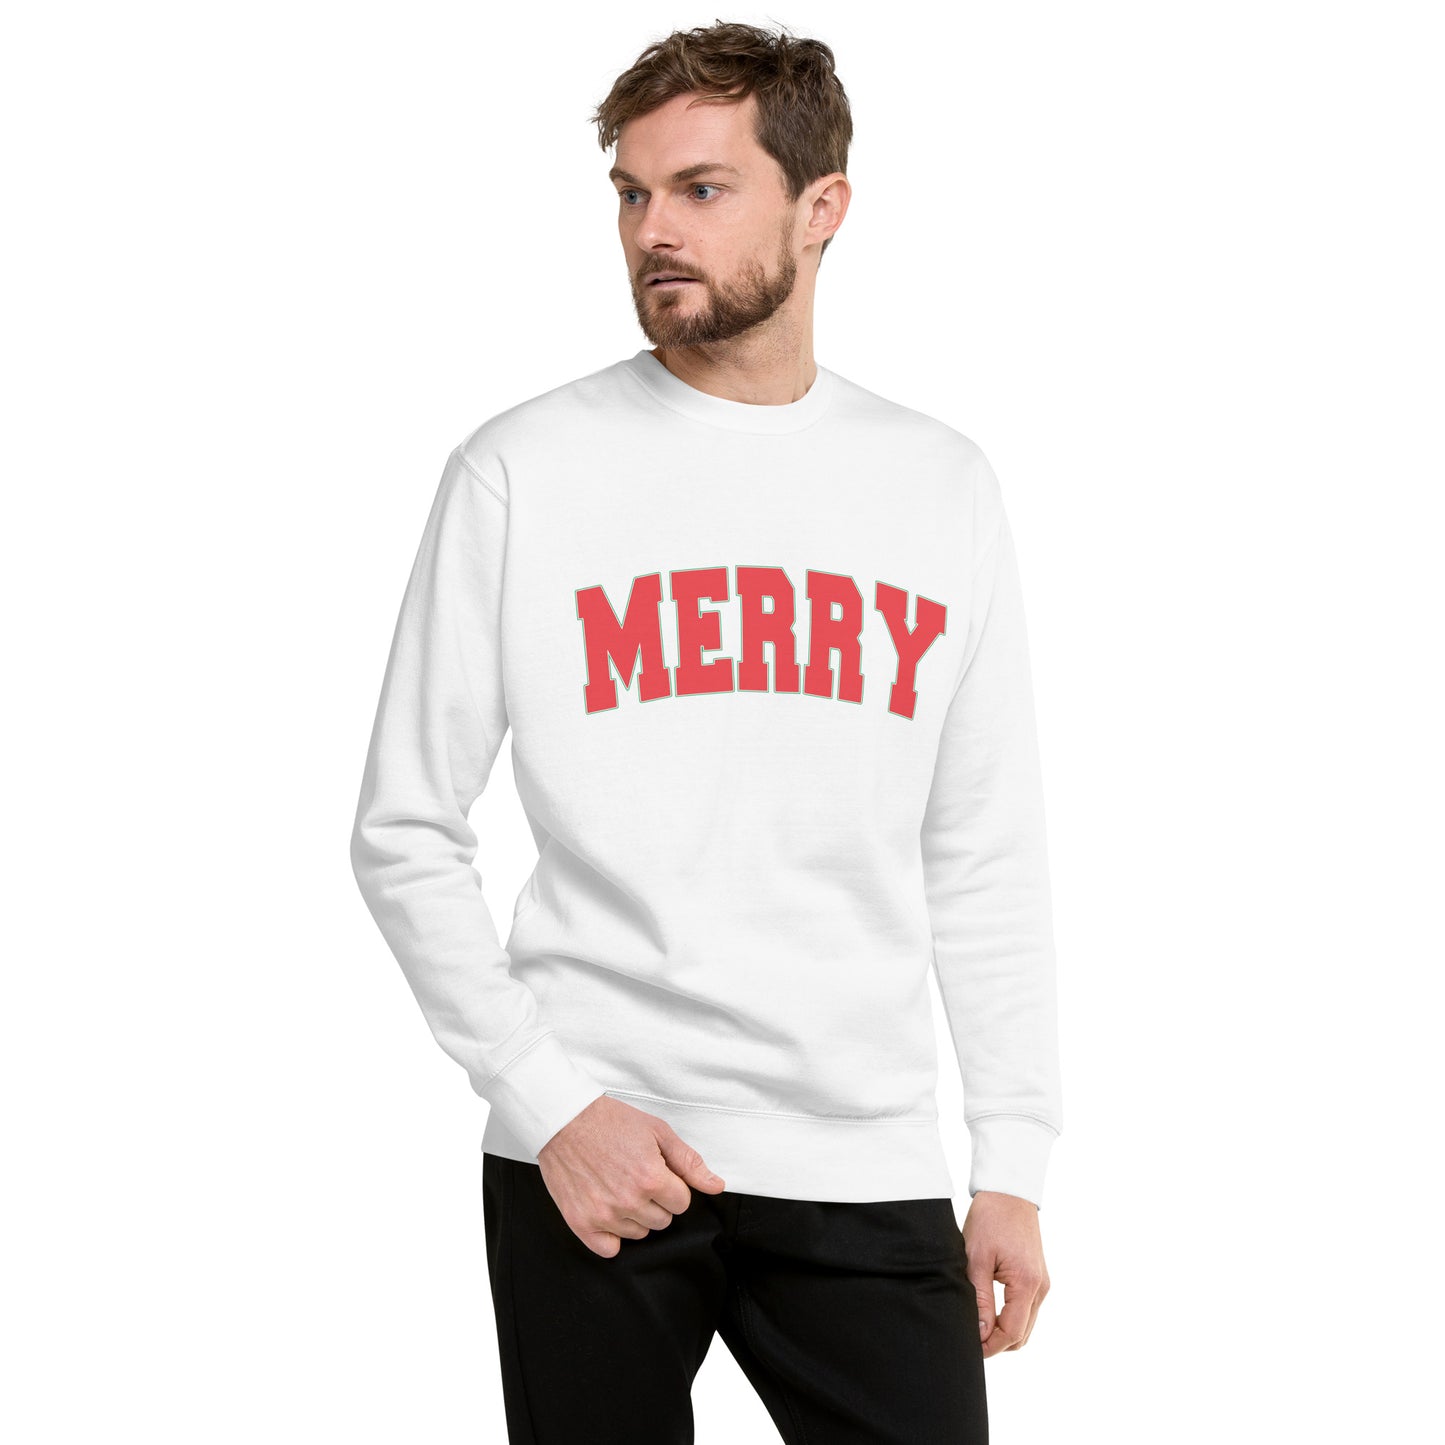 "Merry" Unisex Premium Sweatshirt